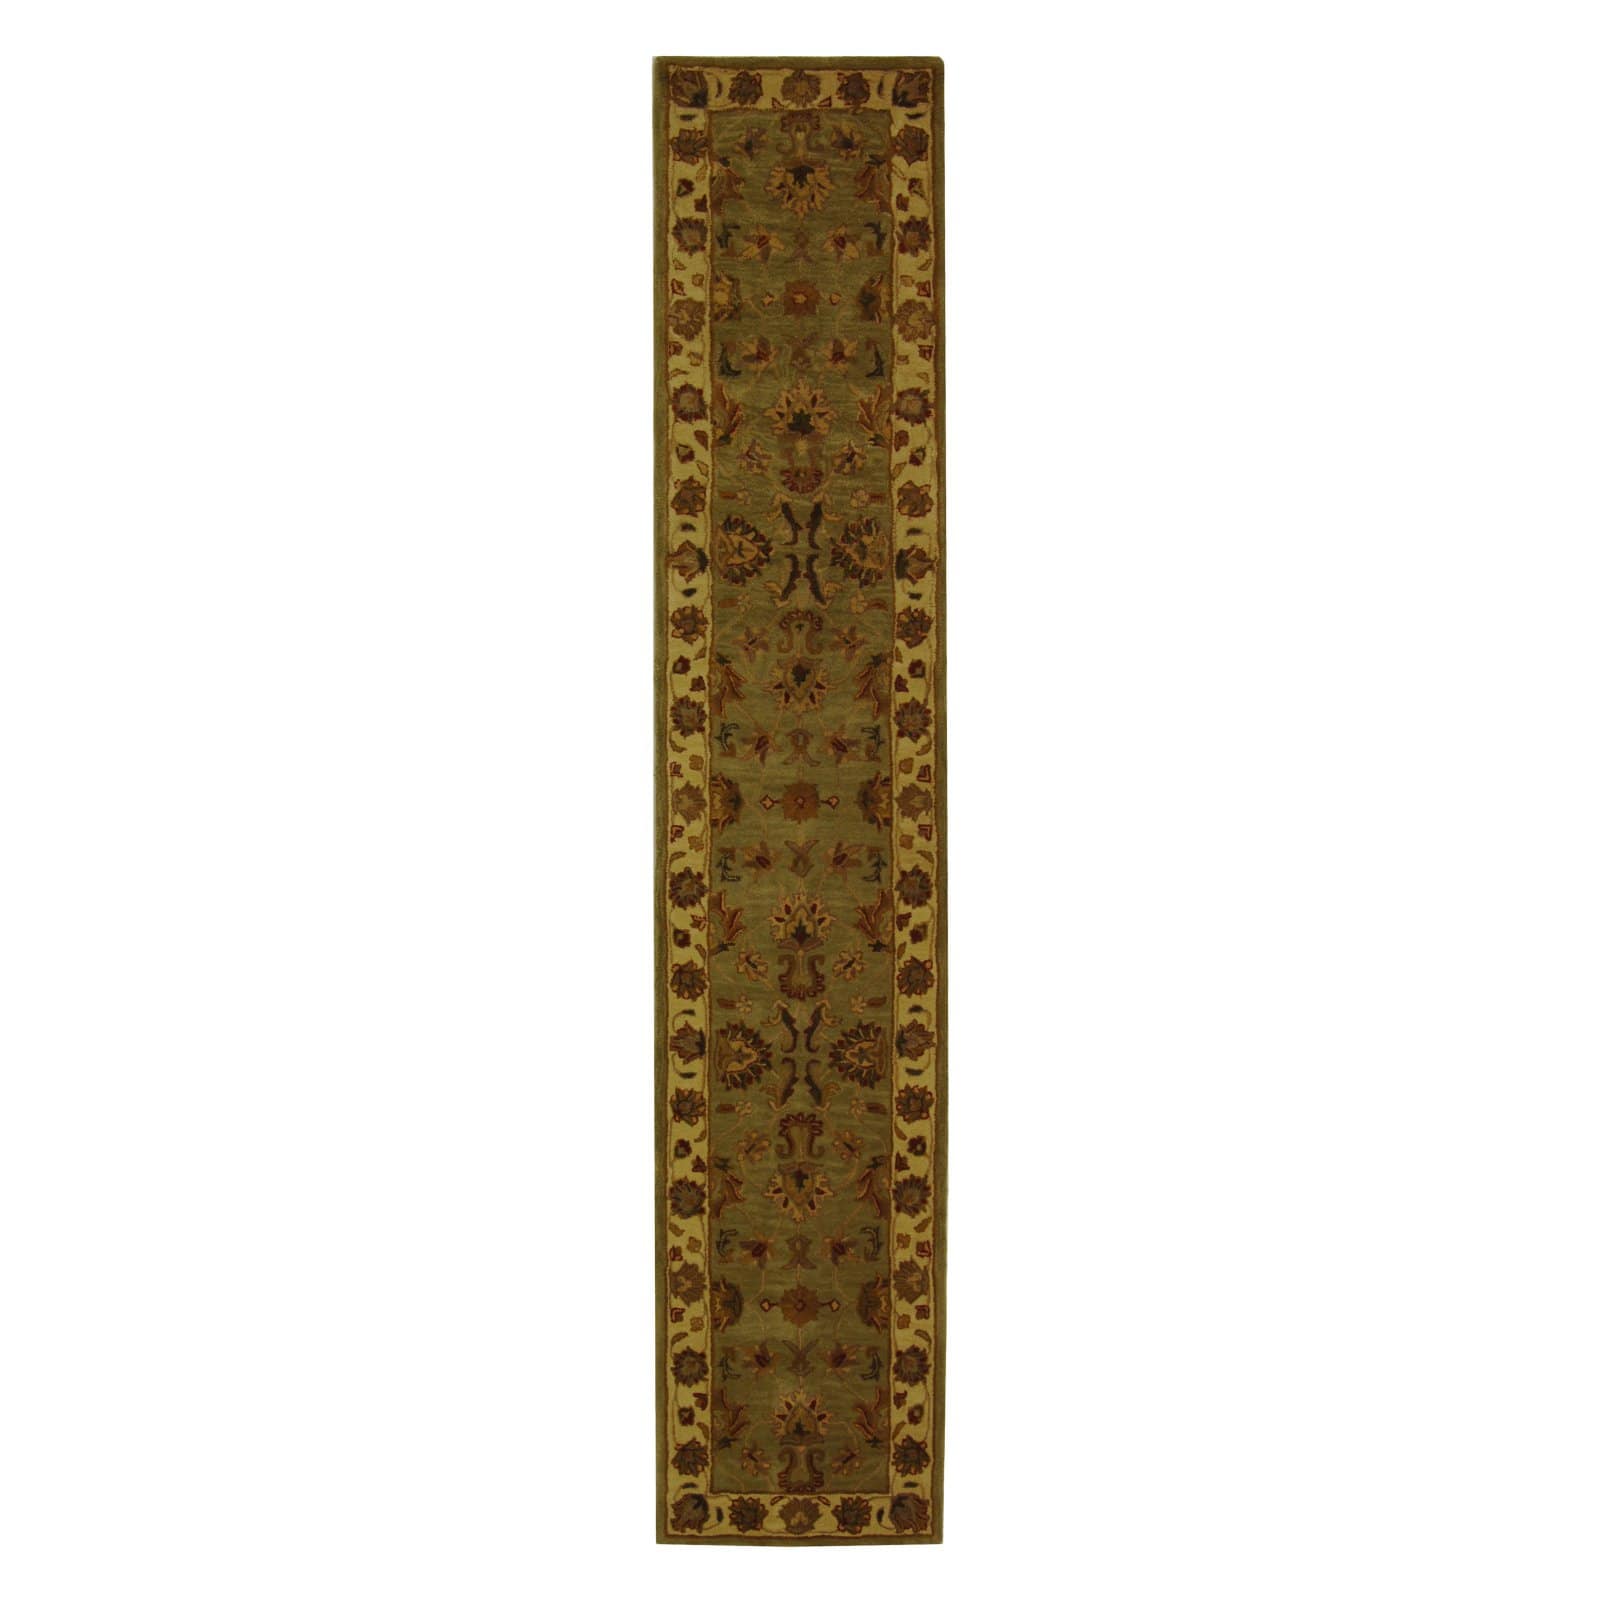 SAFAVIEH Heritage Regis Traditional Wool Area Rug, Green/Gold, 8'3" x 11' - image 3 of 10